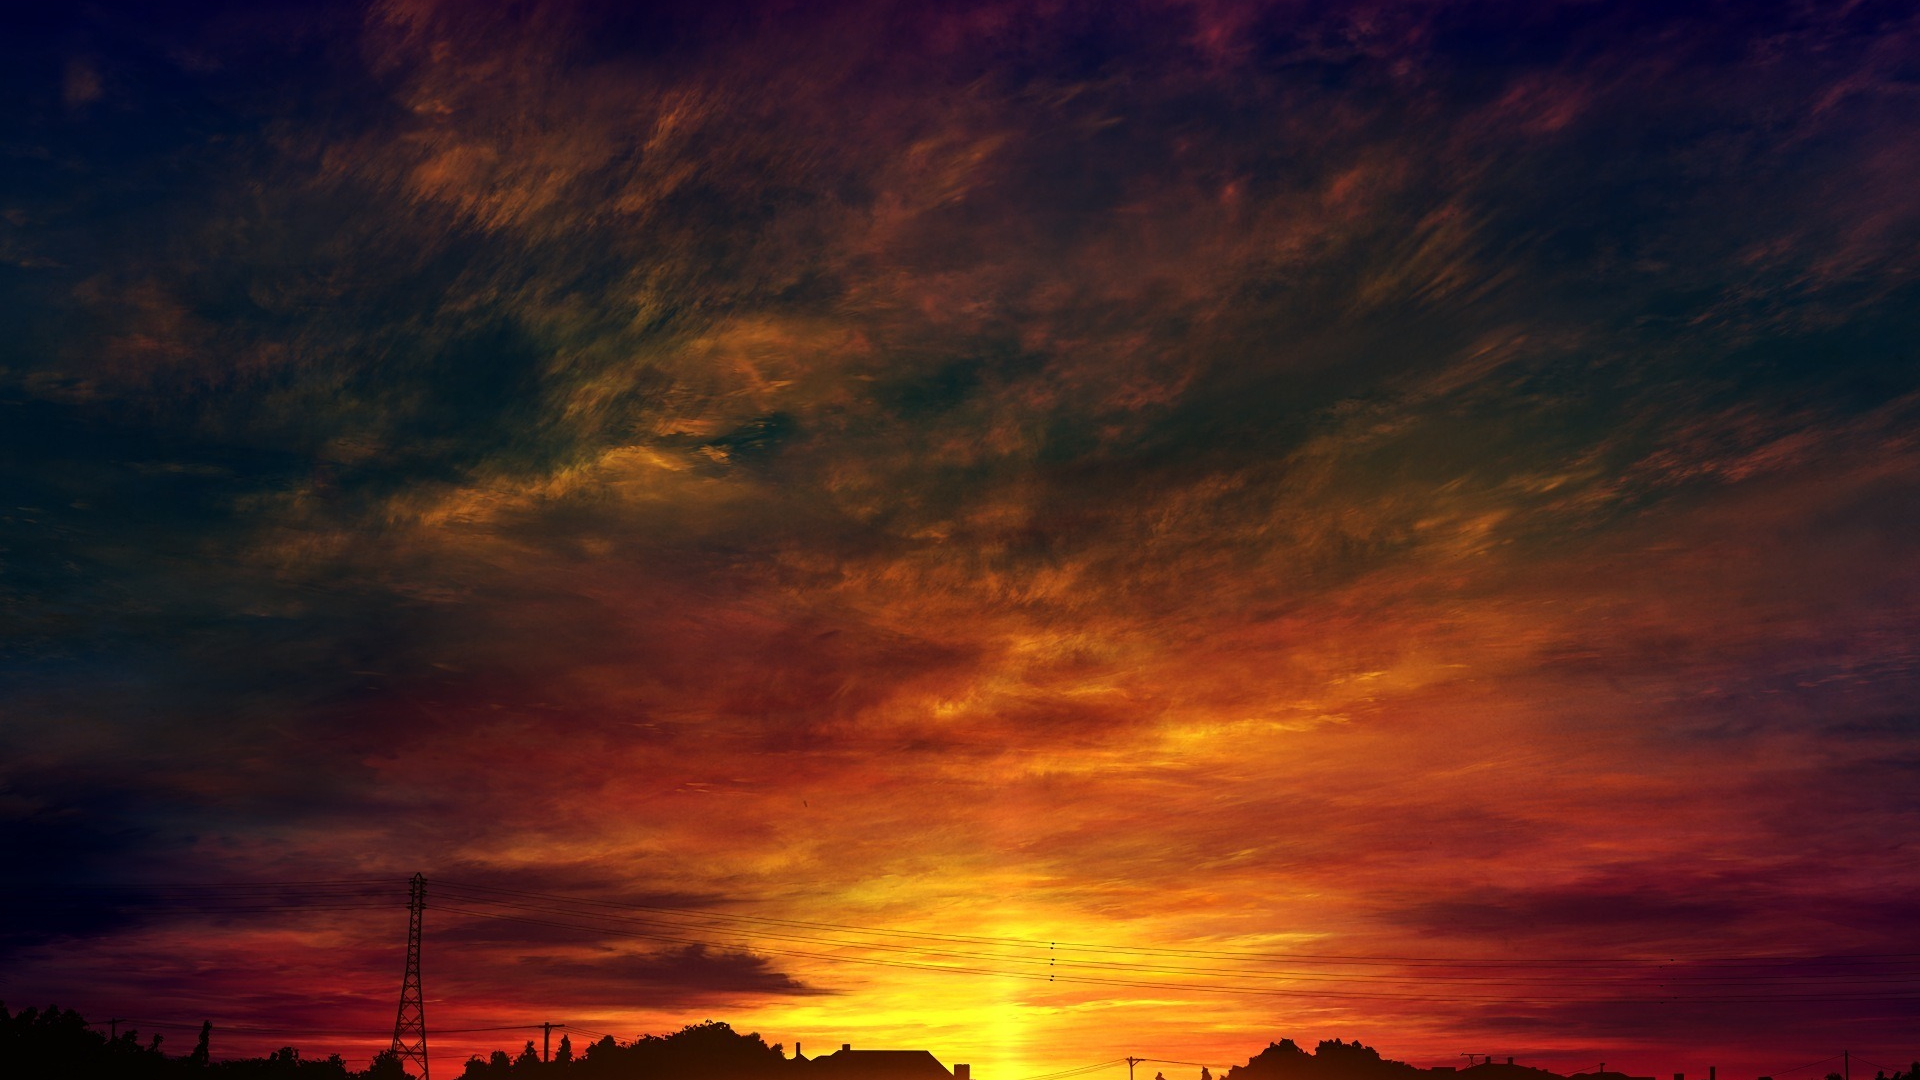 Download 1920x1080 Wallpaper Original Anime Sunset Sky Full Hd